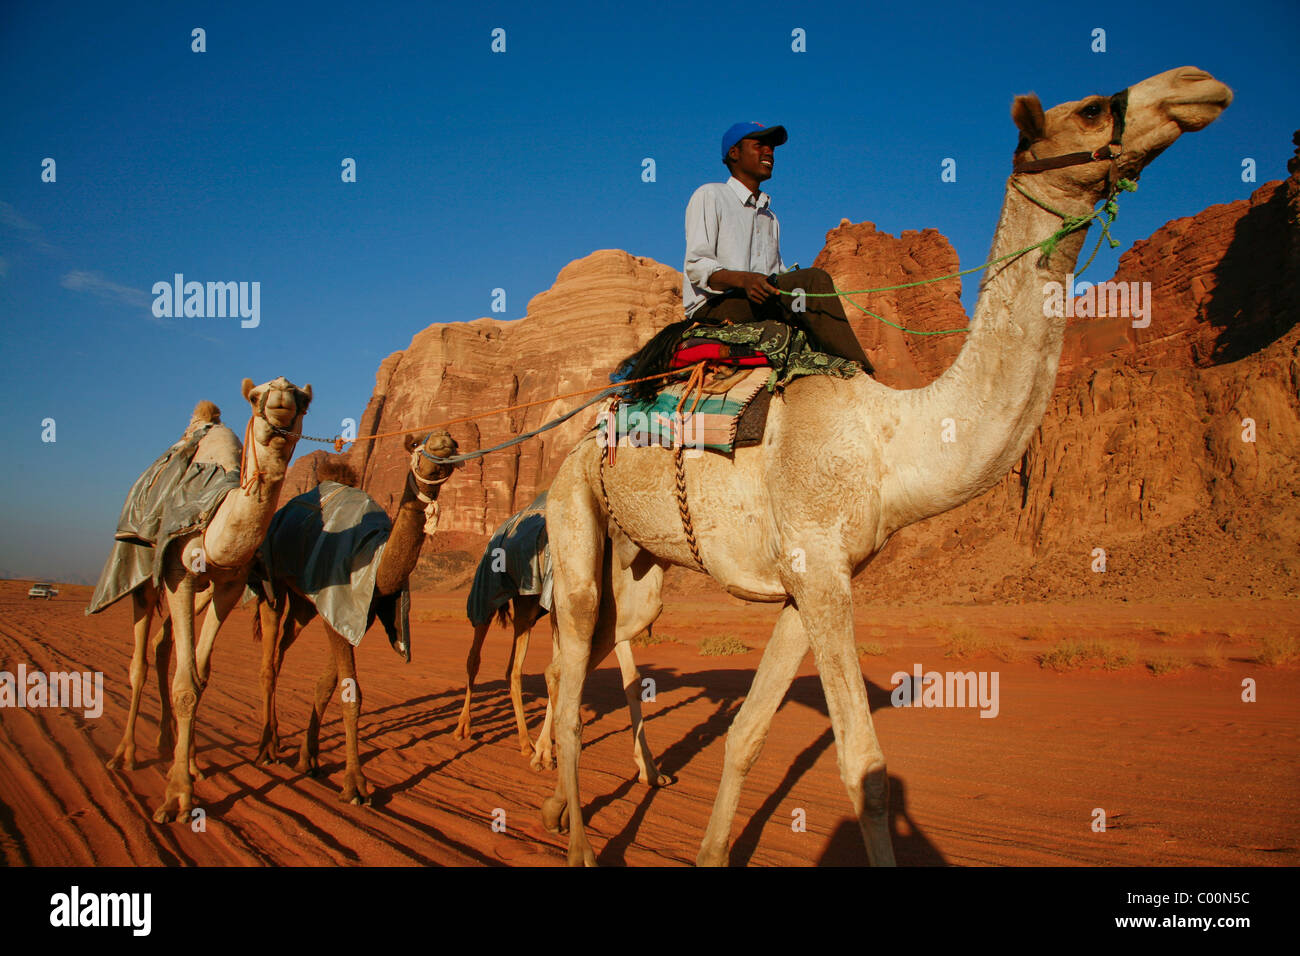 Sudani man training camels for racing, Wadi Rum, Jordan. Stock Photo